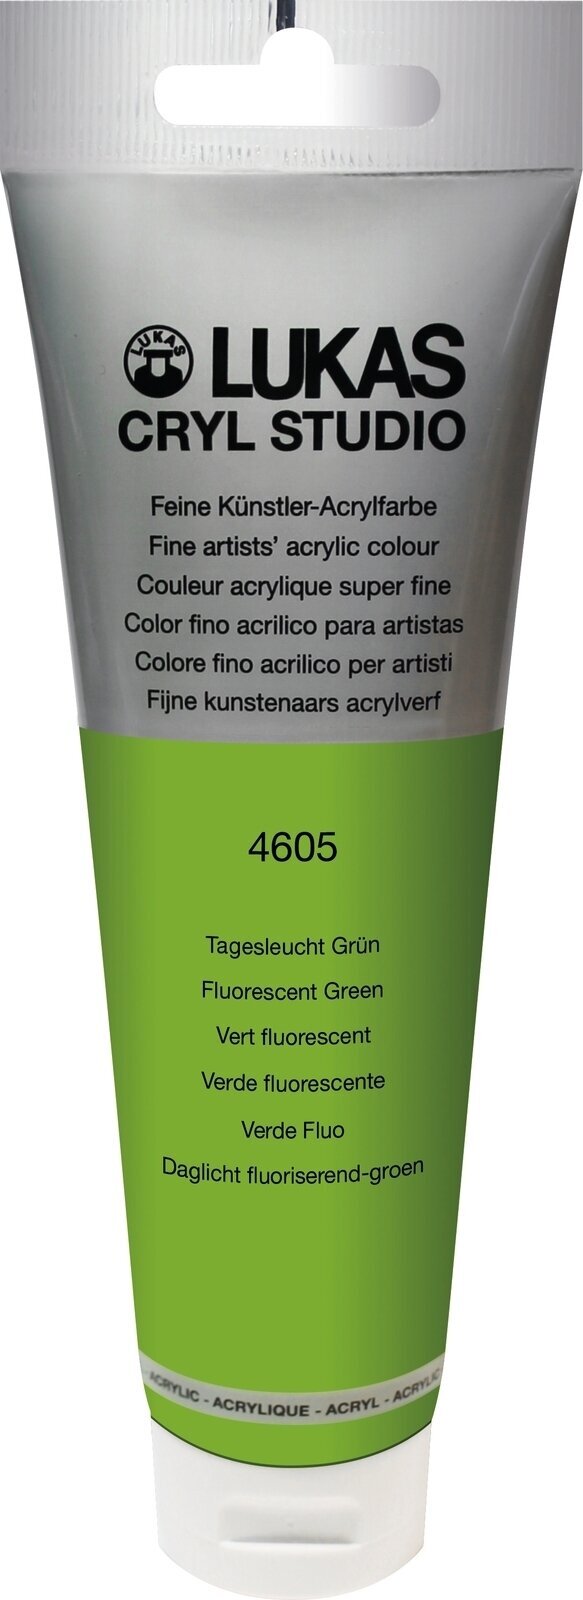 Acrylic Paint Lukas Cryl Studio Acrylic Paint Plastic Tube Acrylic Paint Fluorescent Green 125 ml 1 pc